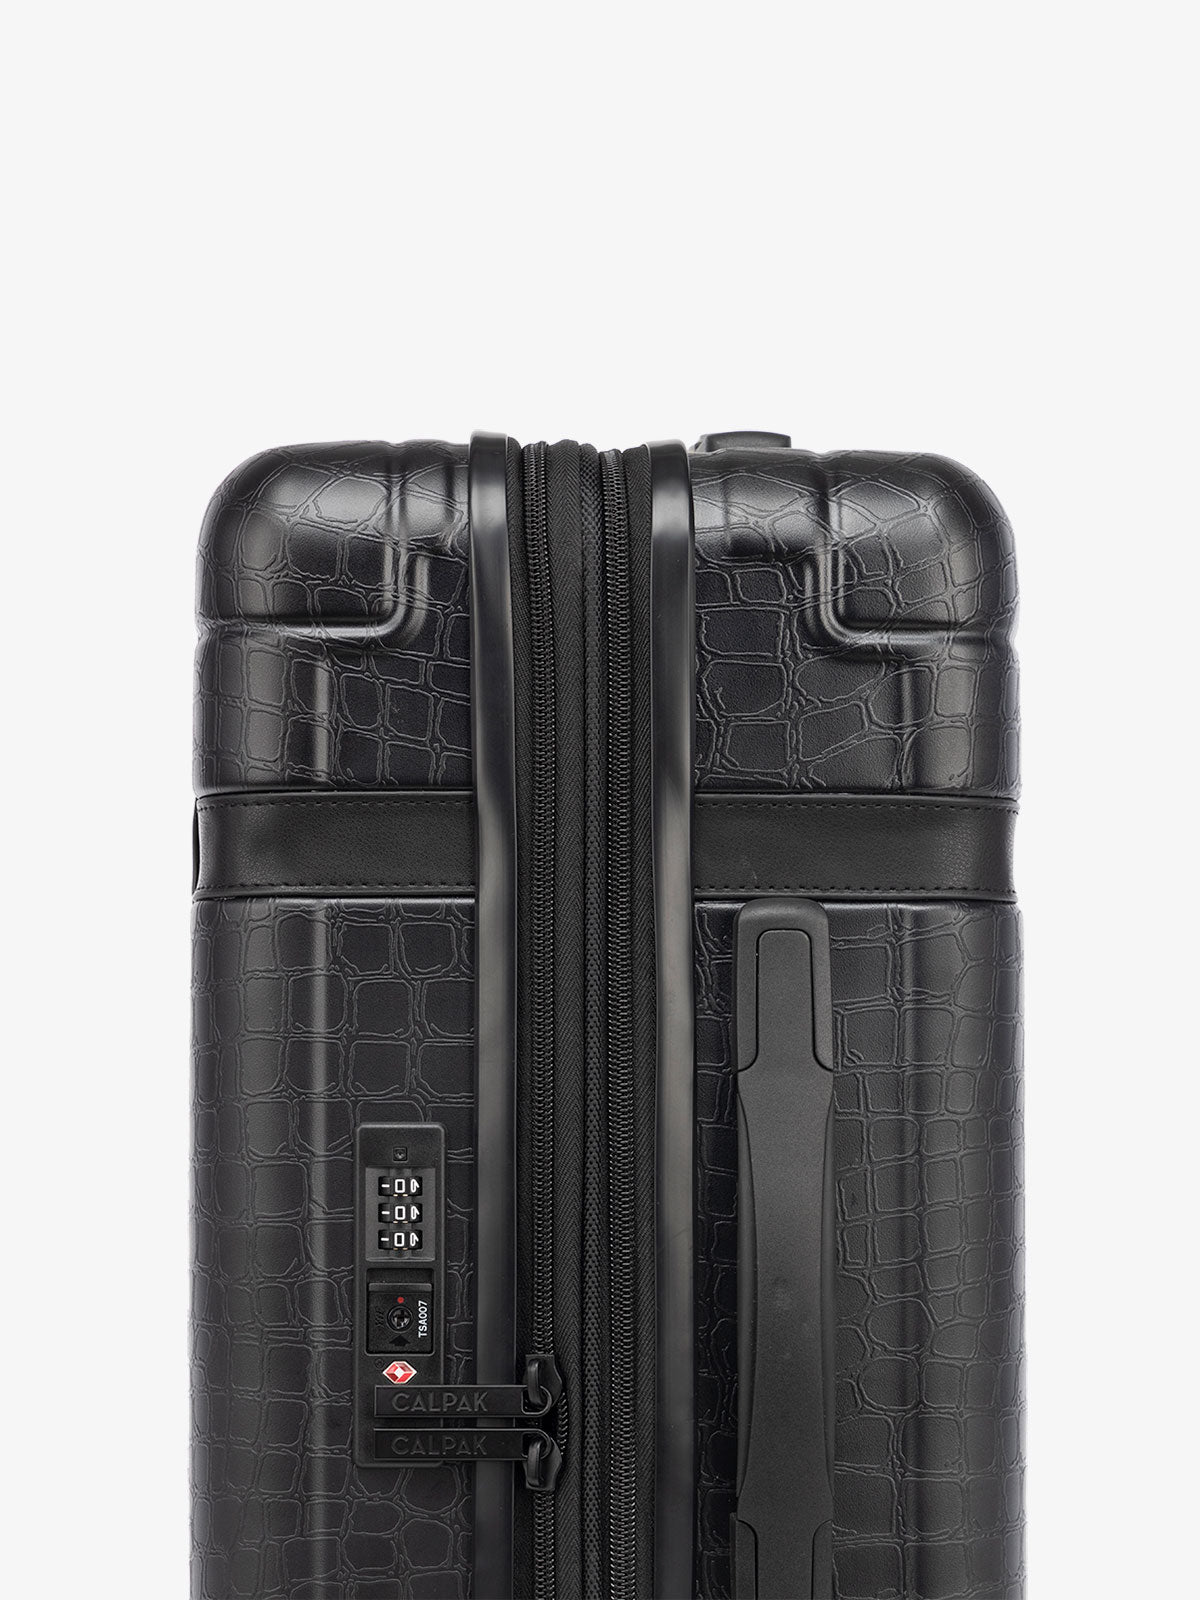 CALPAK TRNK checked black luggage with TSA approved locks